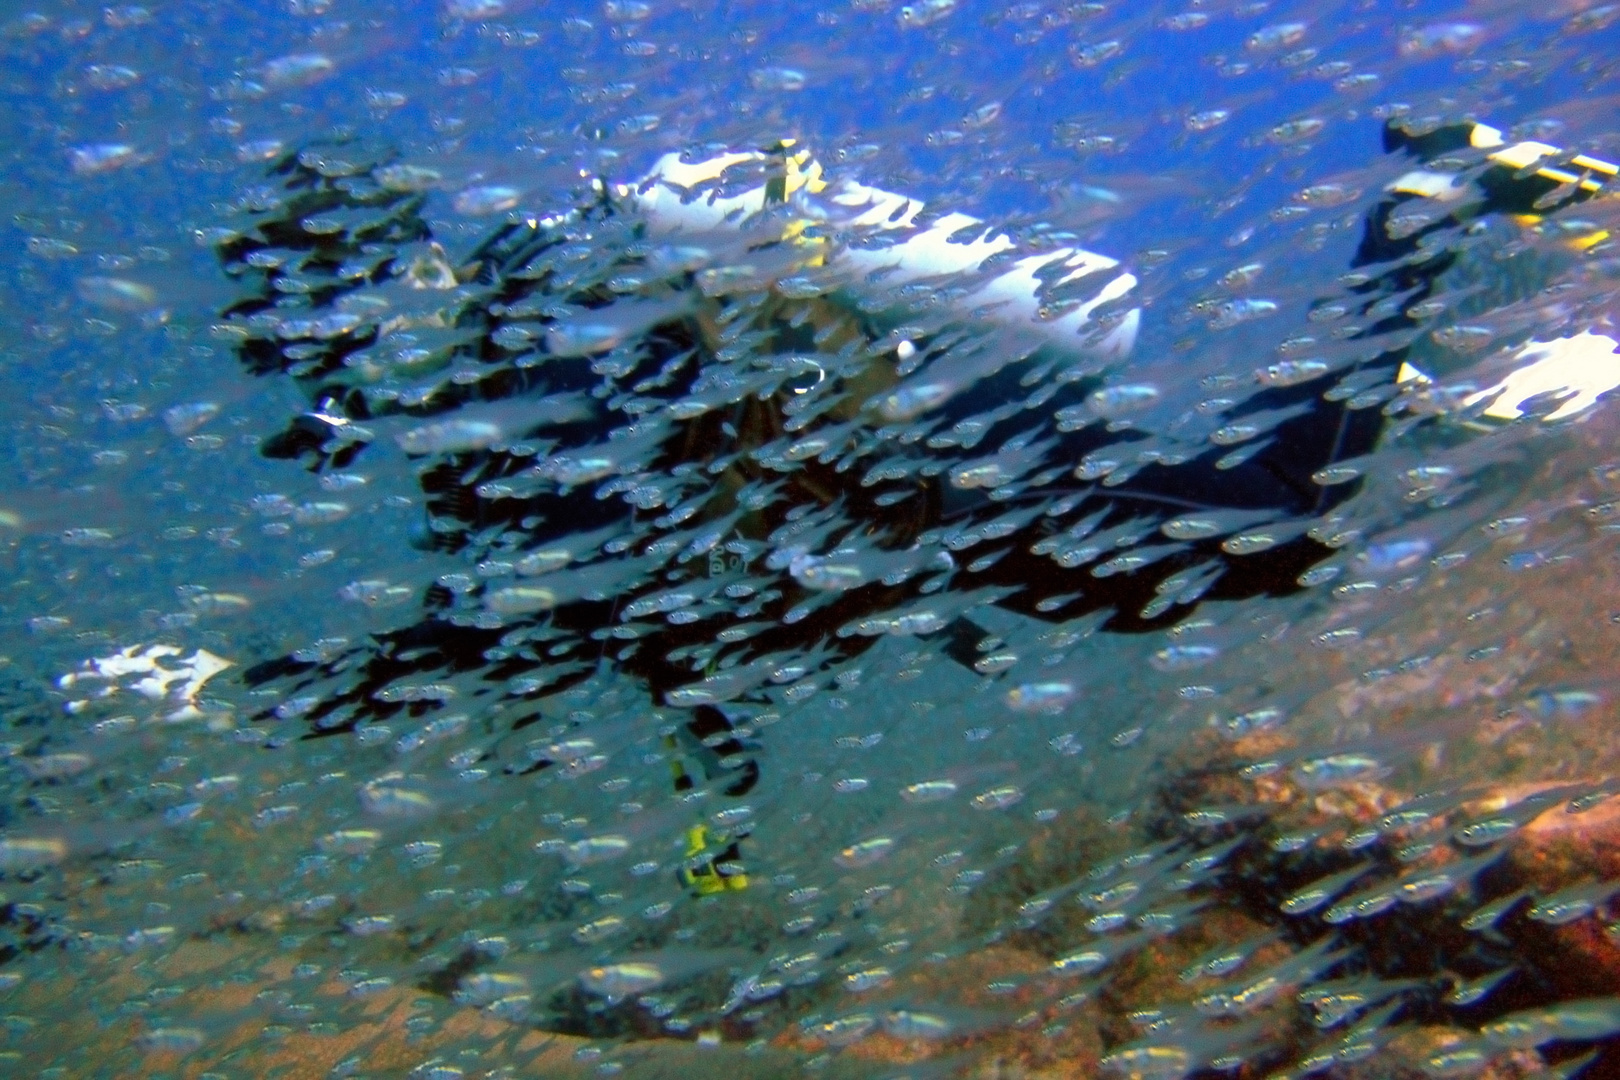 Dive buddy behind a fish swarm